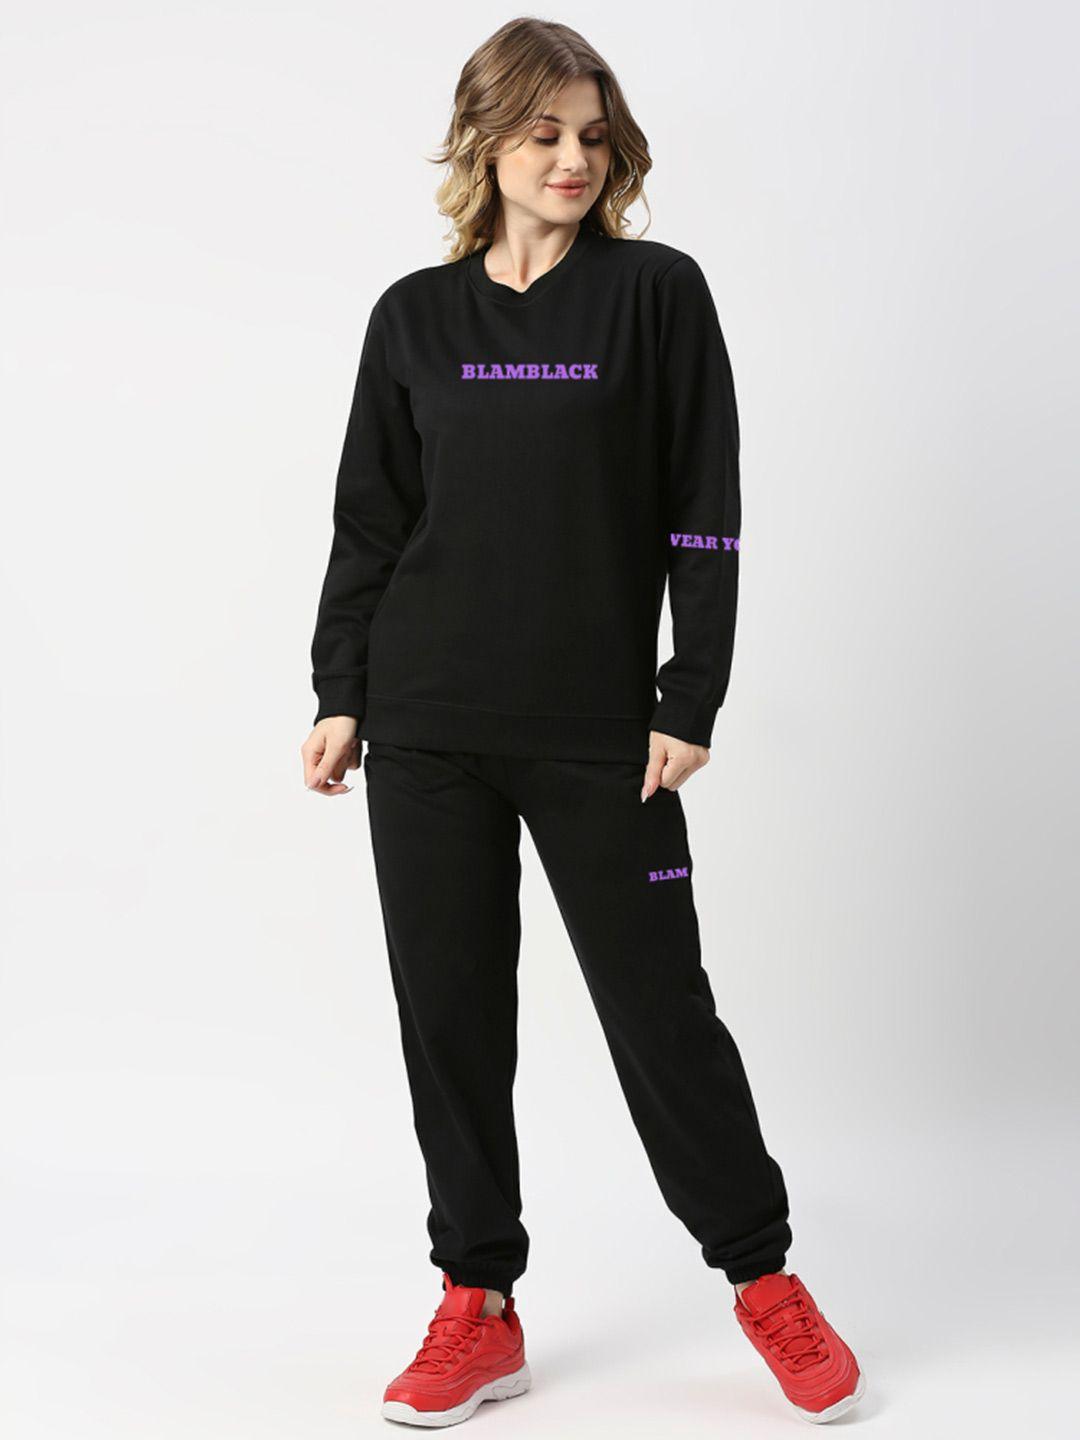 blamblack women sweatshirt & joggers